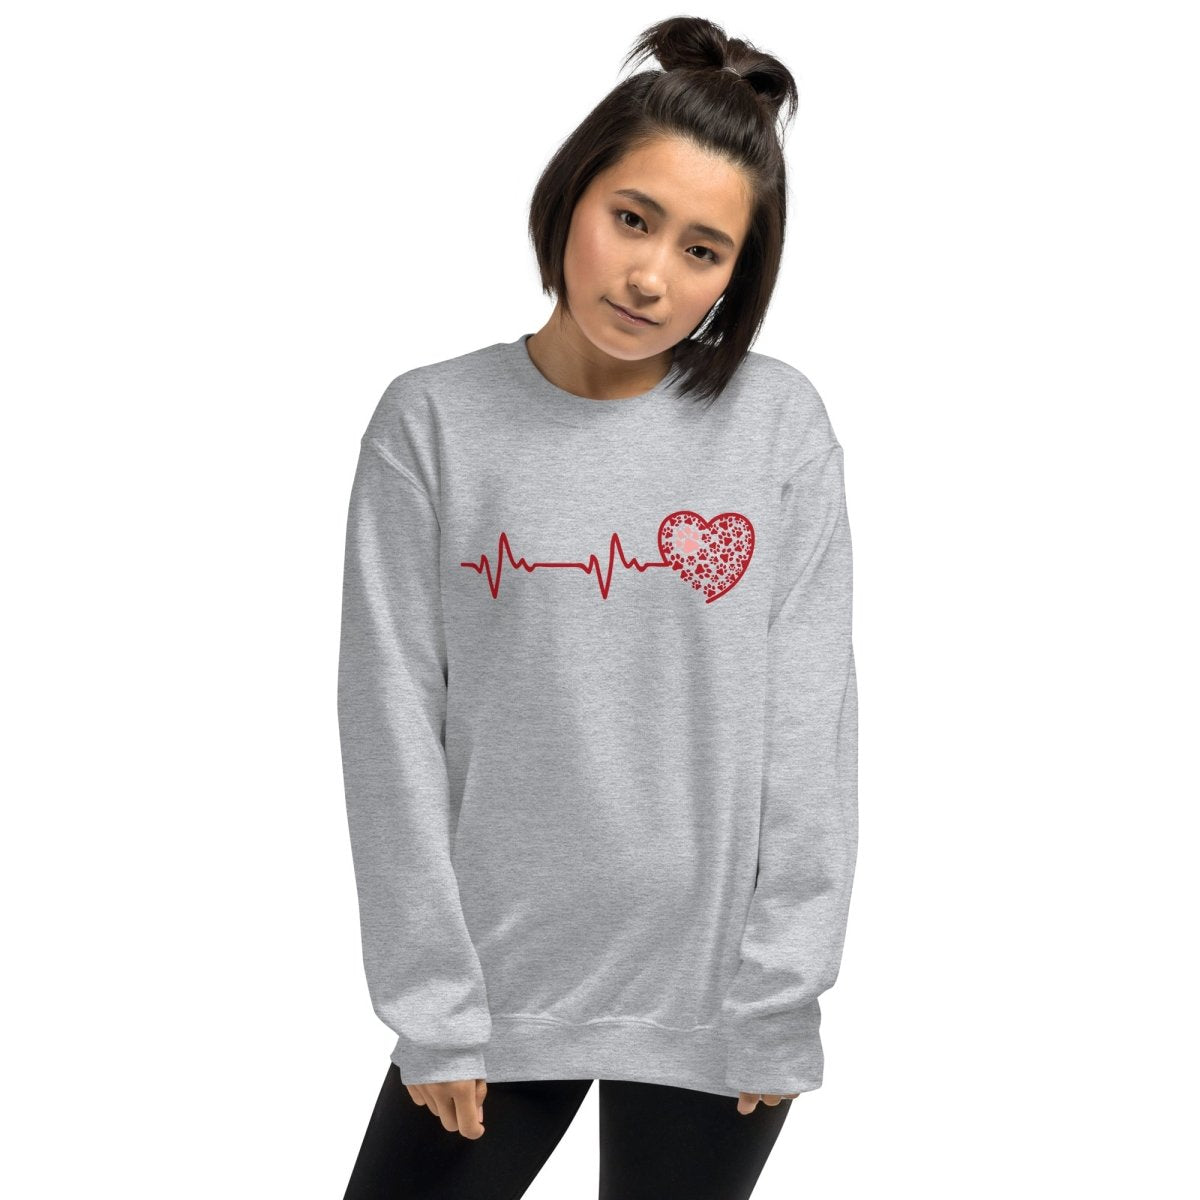 Red Heartbeat Dog Paws Sweatshirt - DoggyLoveandMore